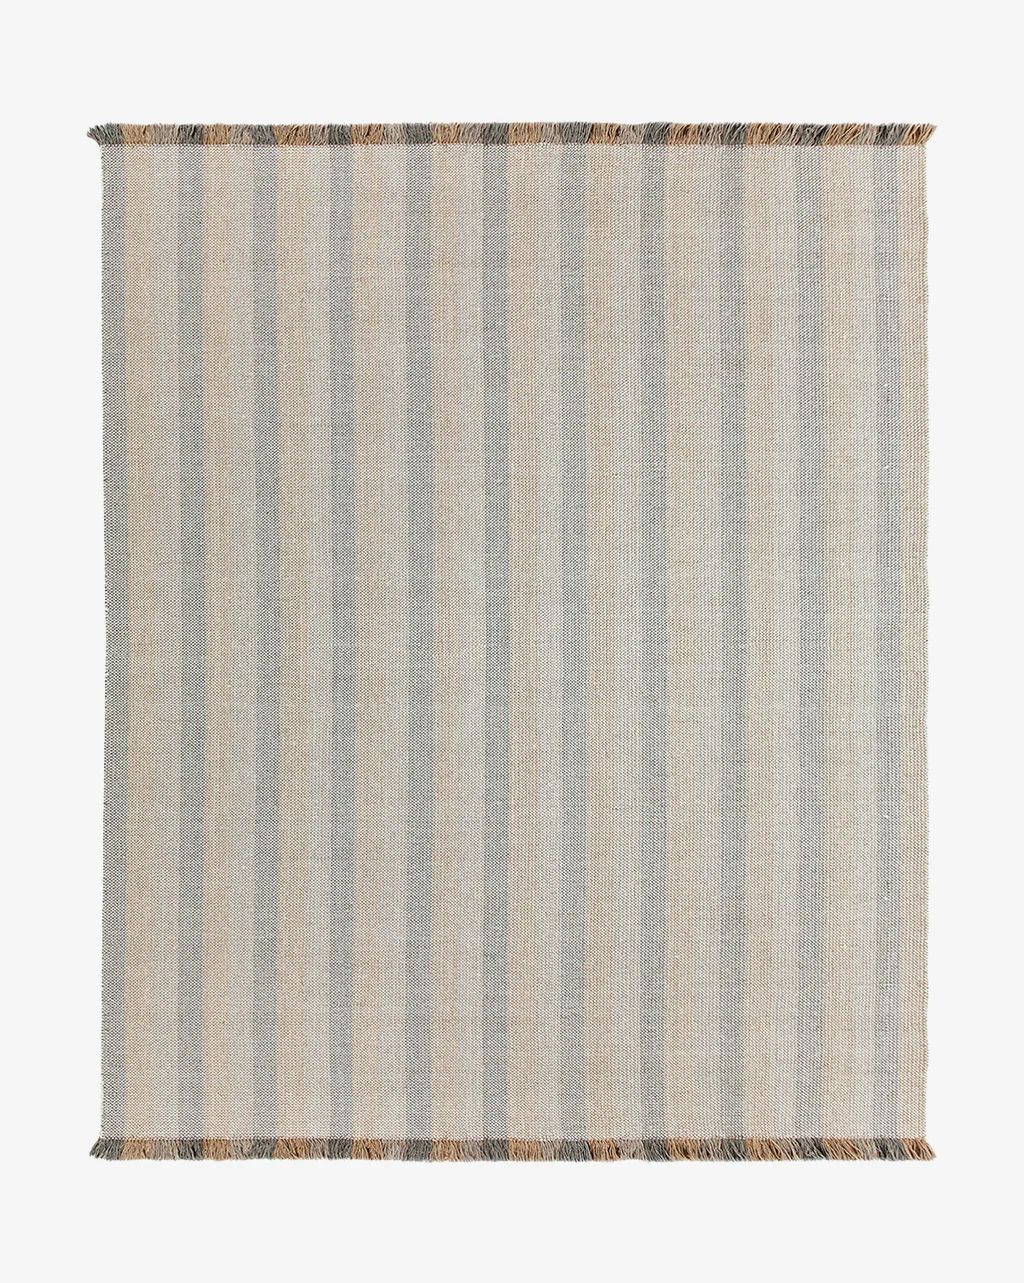 Grandby Handwoven Wool Rug | McGee & Co.